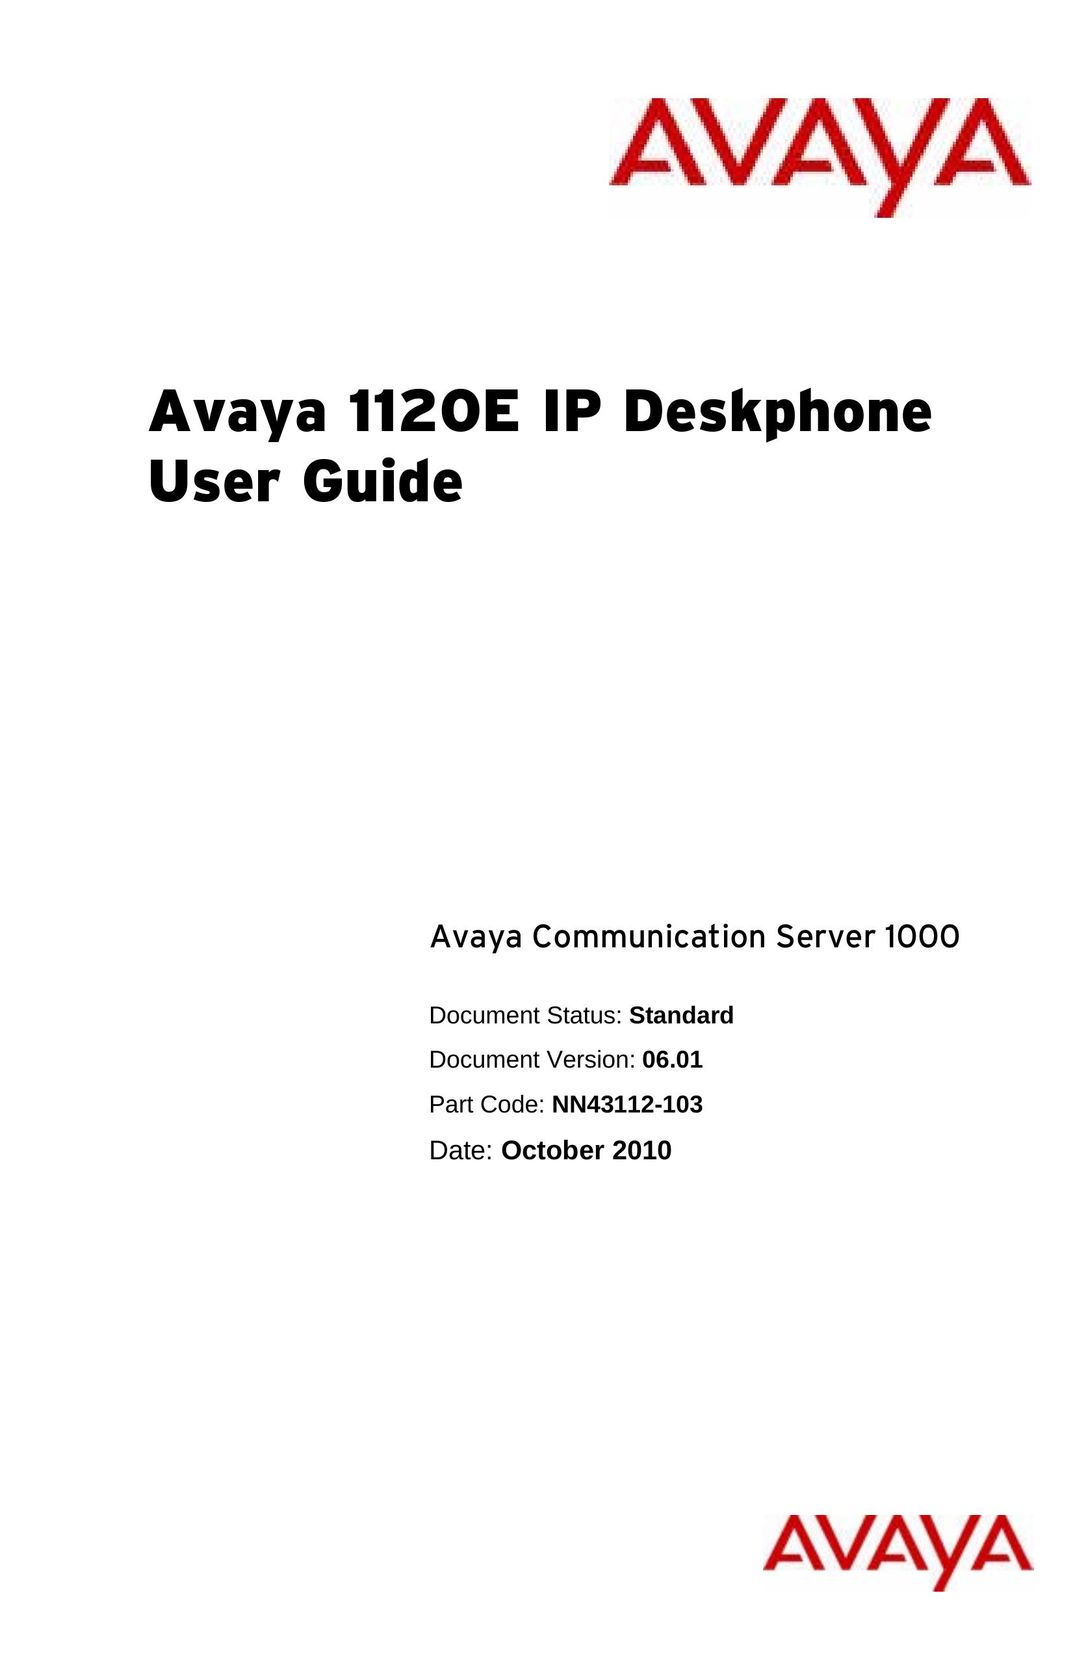 Avaya 1120E Cordless Telephone User Manual